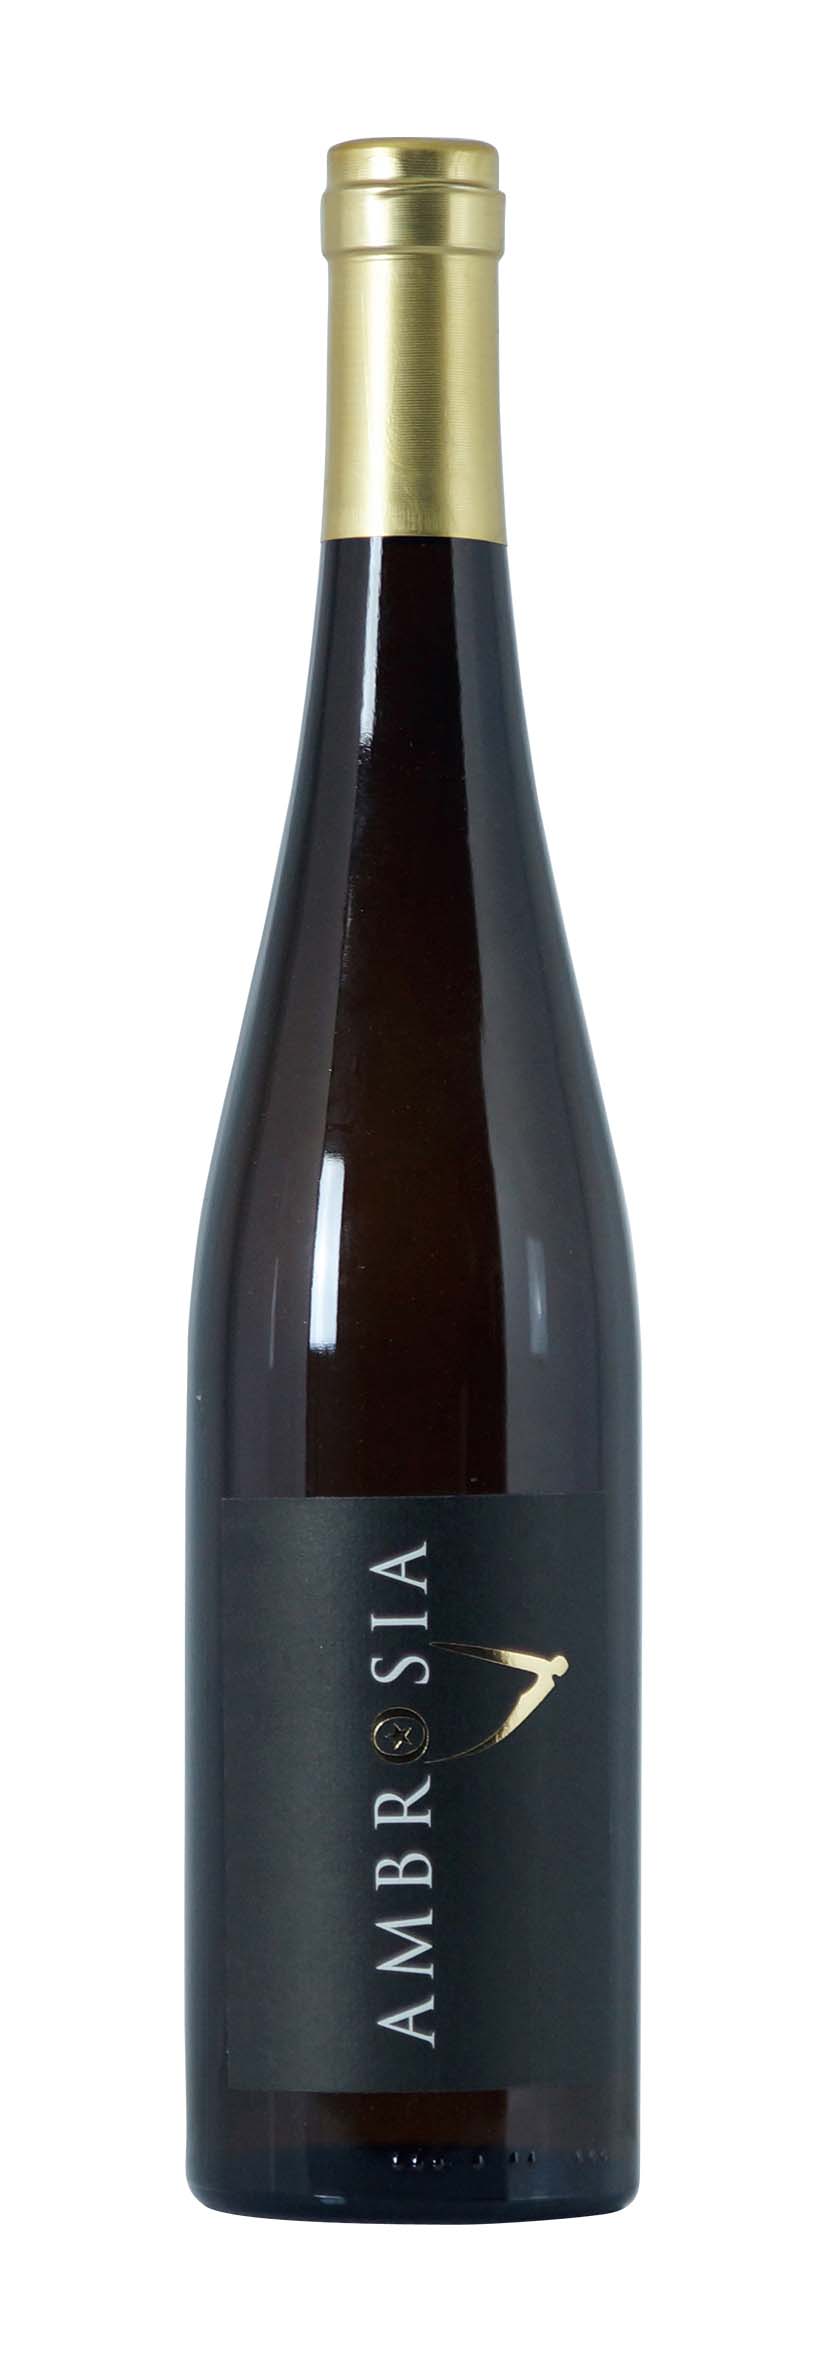 Pfalz Chardonnay Ambrosia trocken 2012